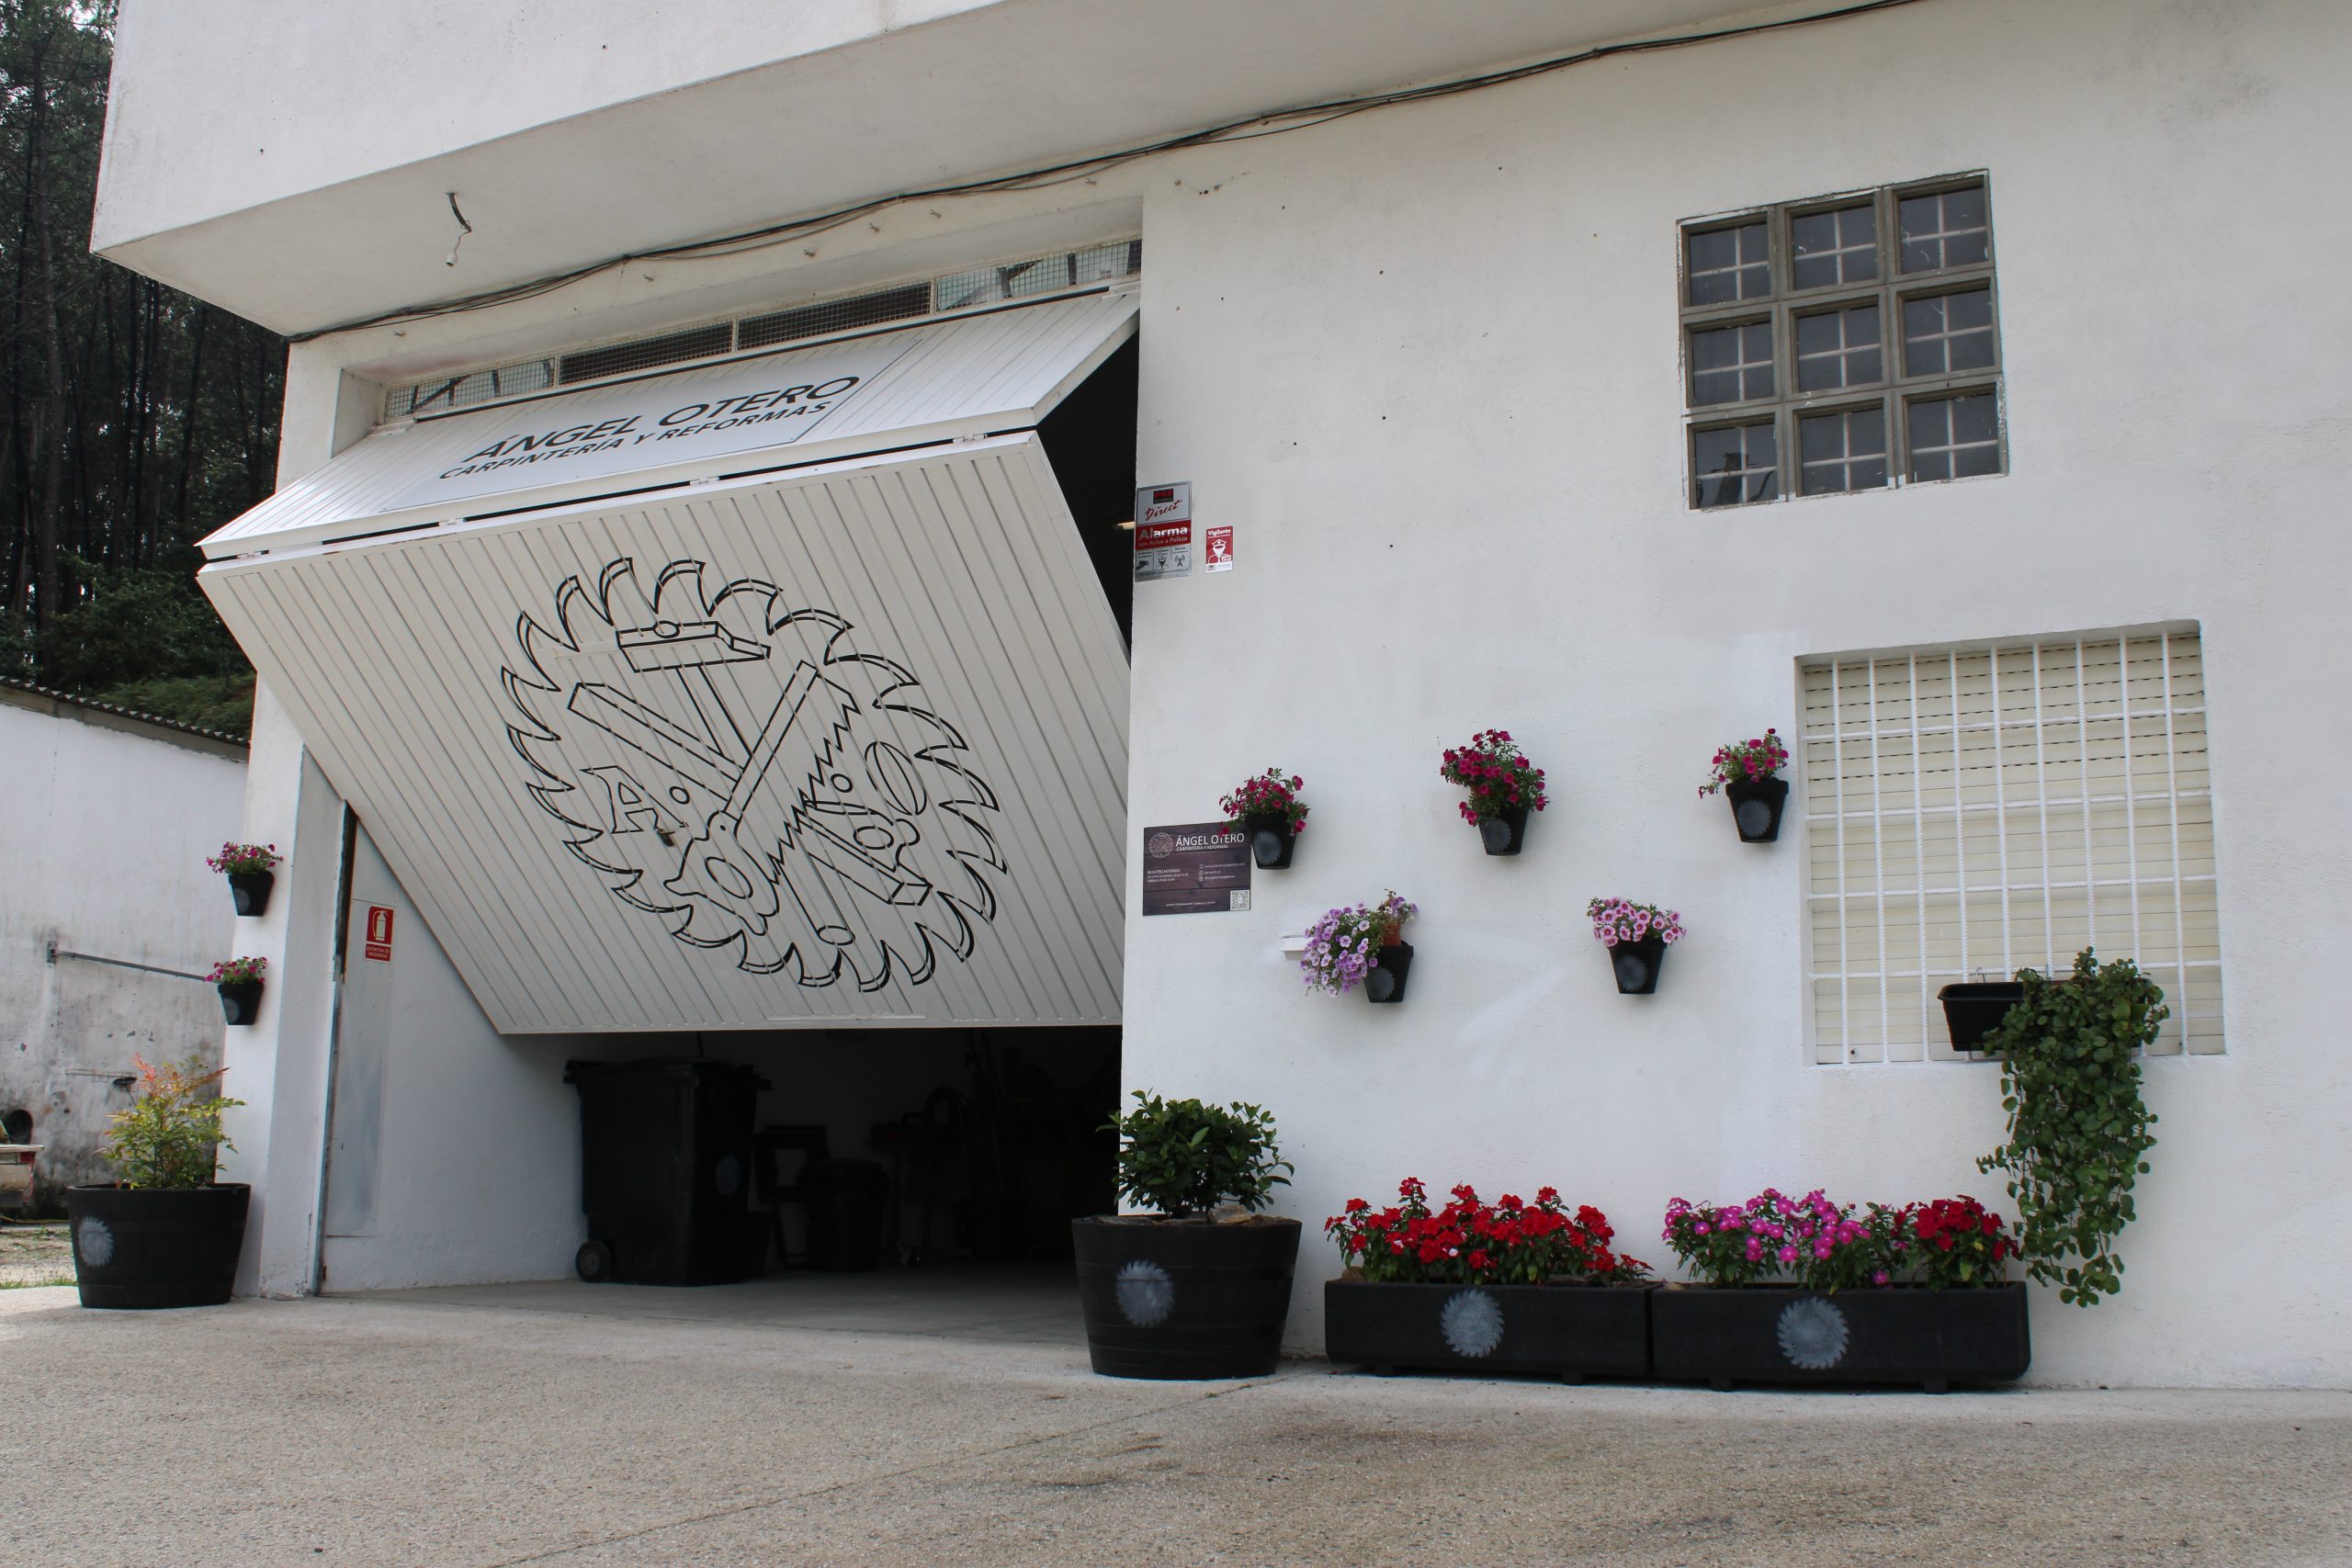 Fotografia del exterior del taller de carpinteria y enaisteria Angel Otero en Santigo de Compostela, España